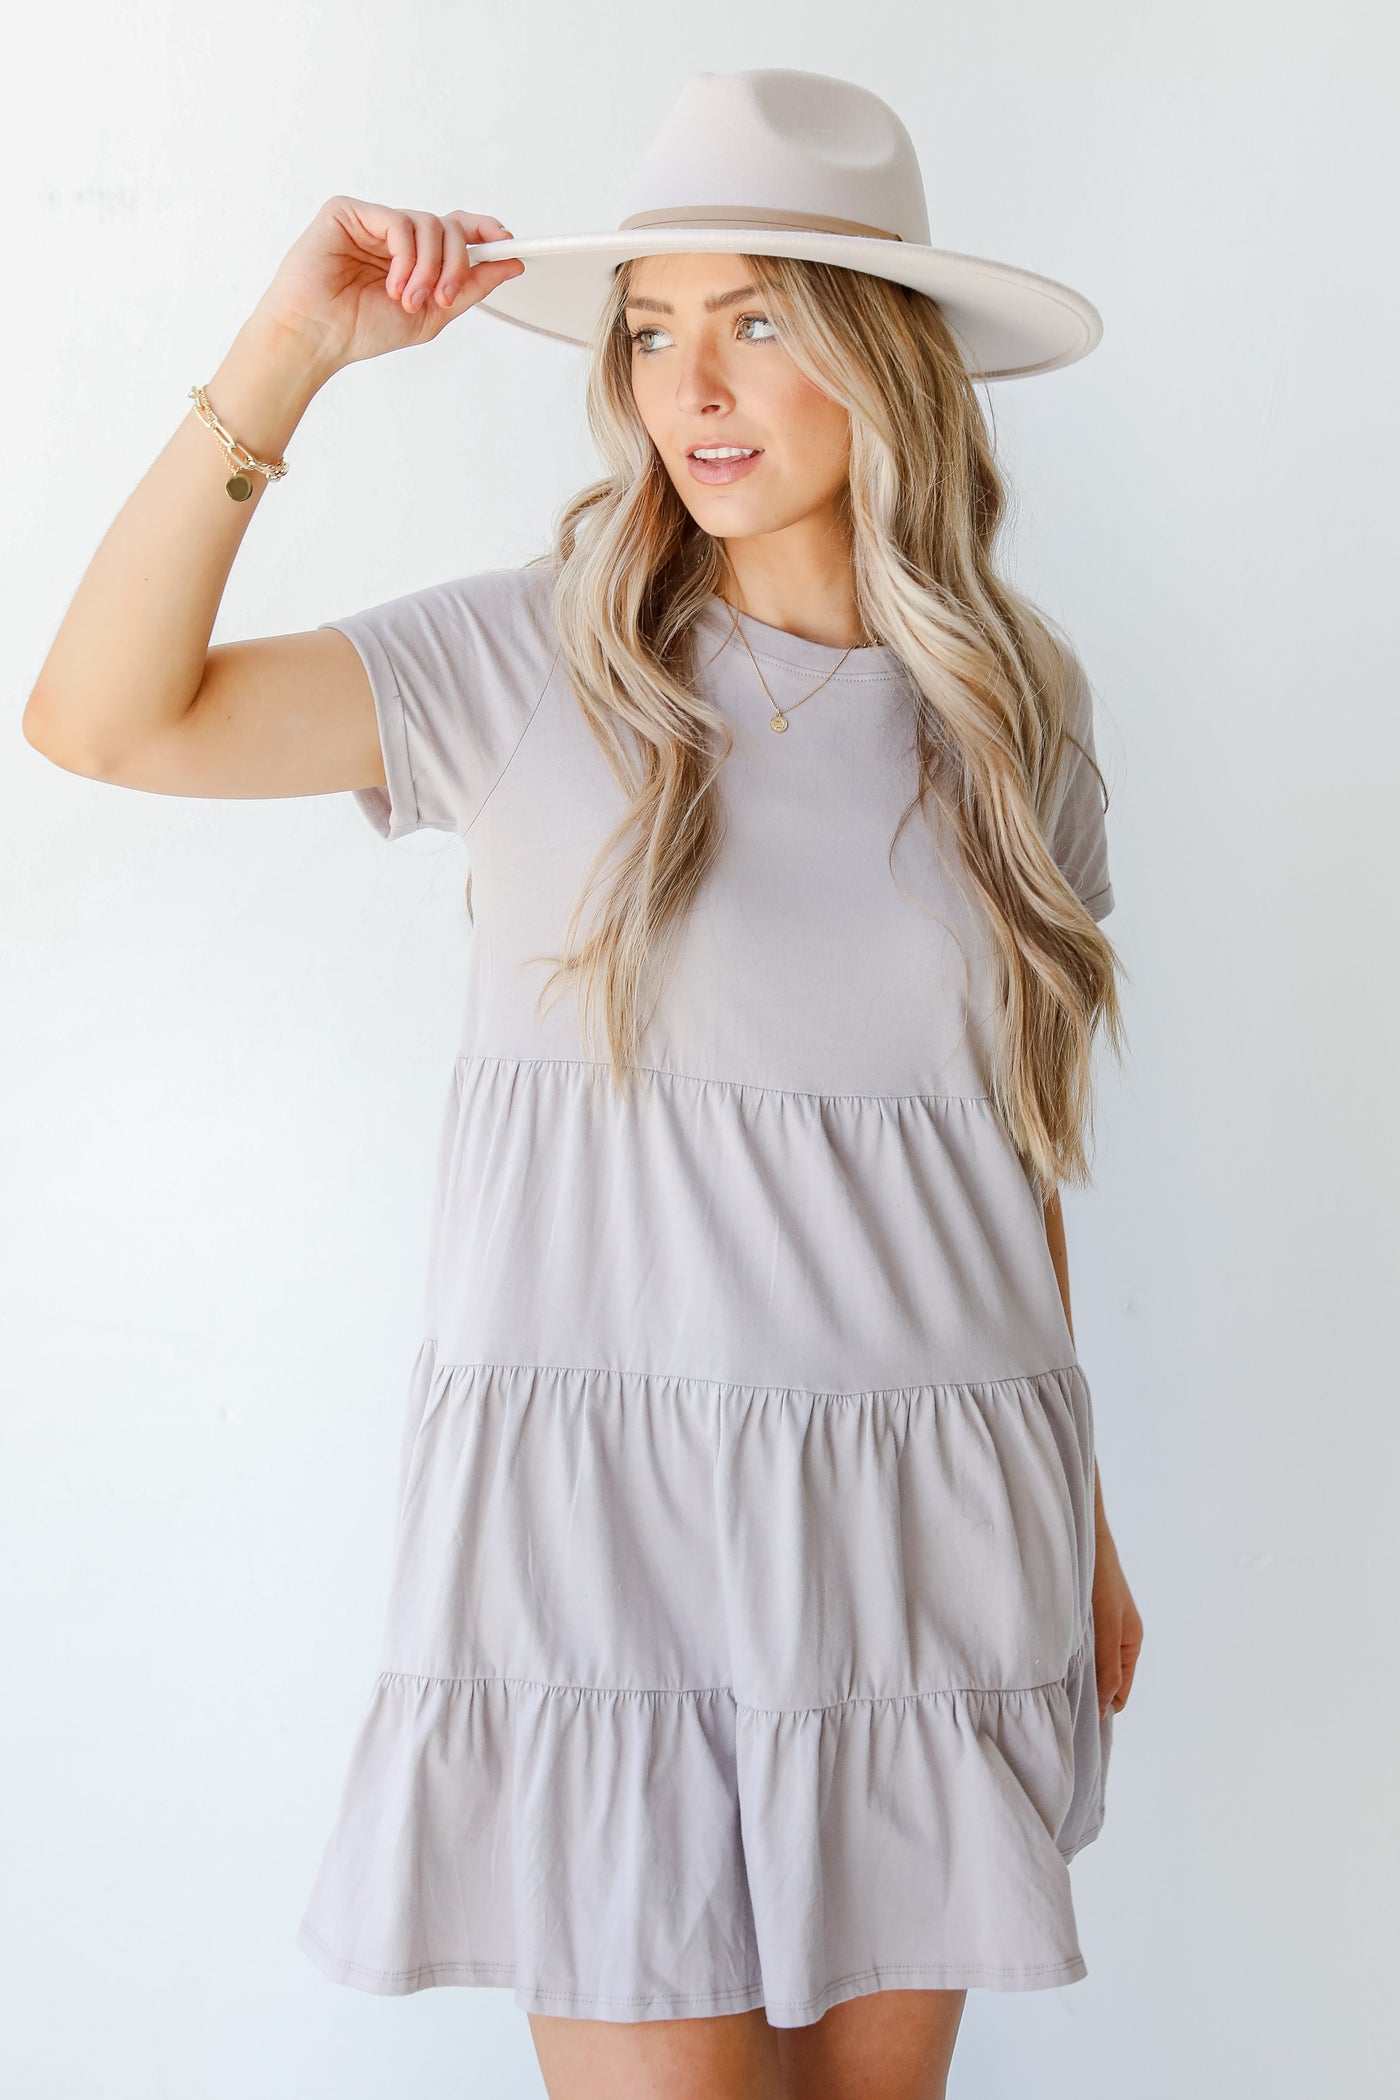 Tiered Mini Dress in grey on model